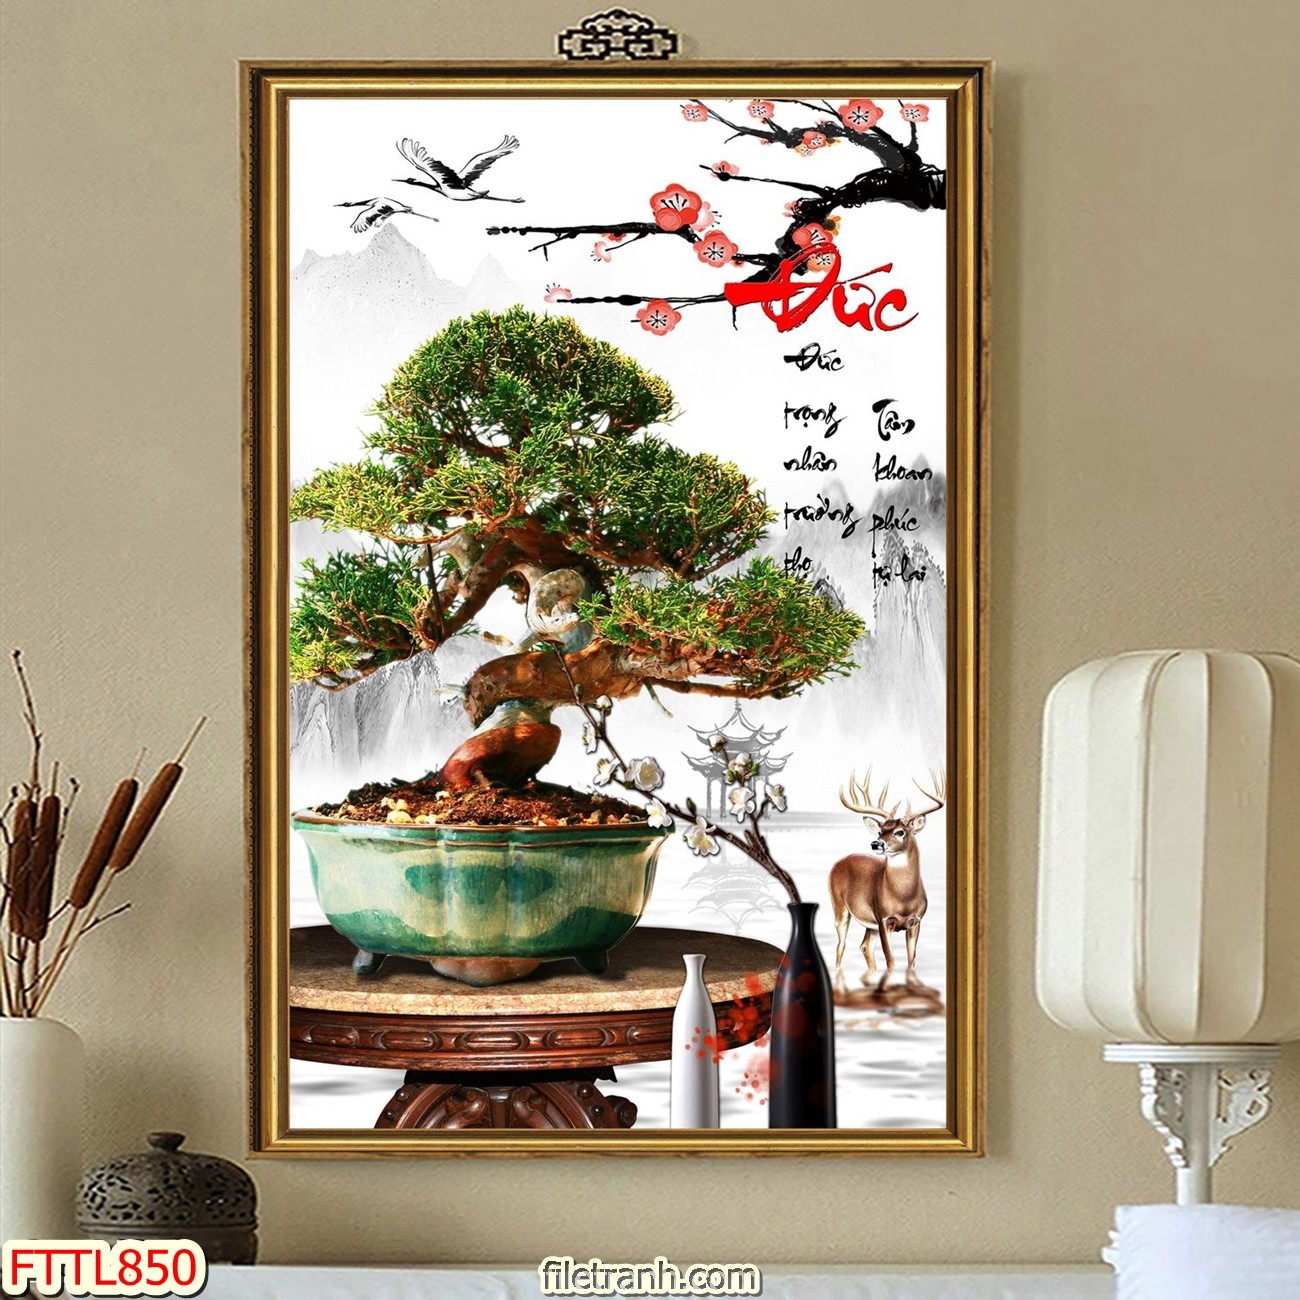 https://filetranh.com/file-tranh-chau-mai-bonsai/file-tranh-chau-mai-bonsai-fttl850.html